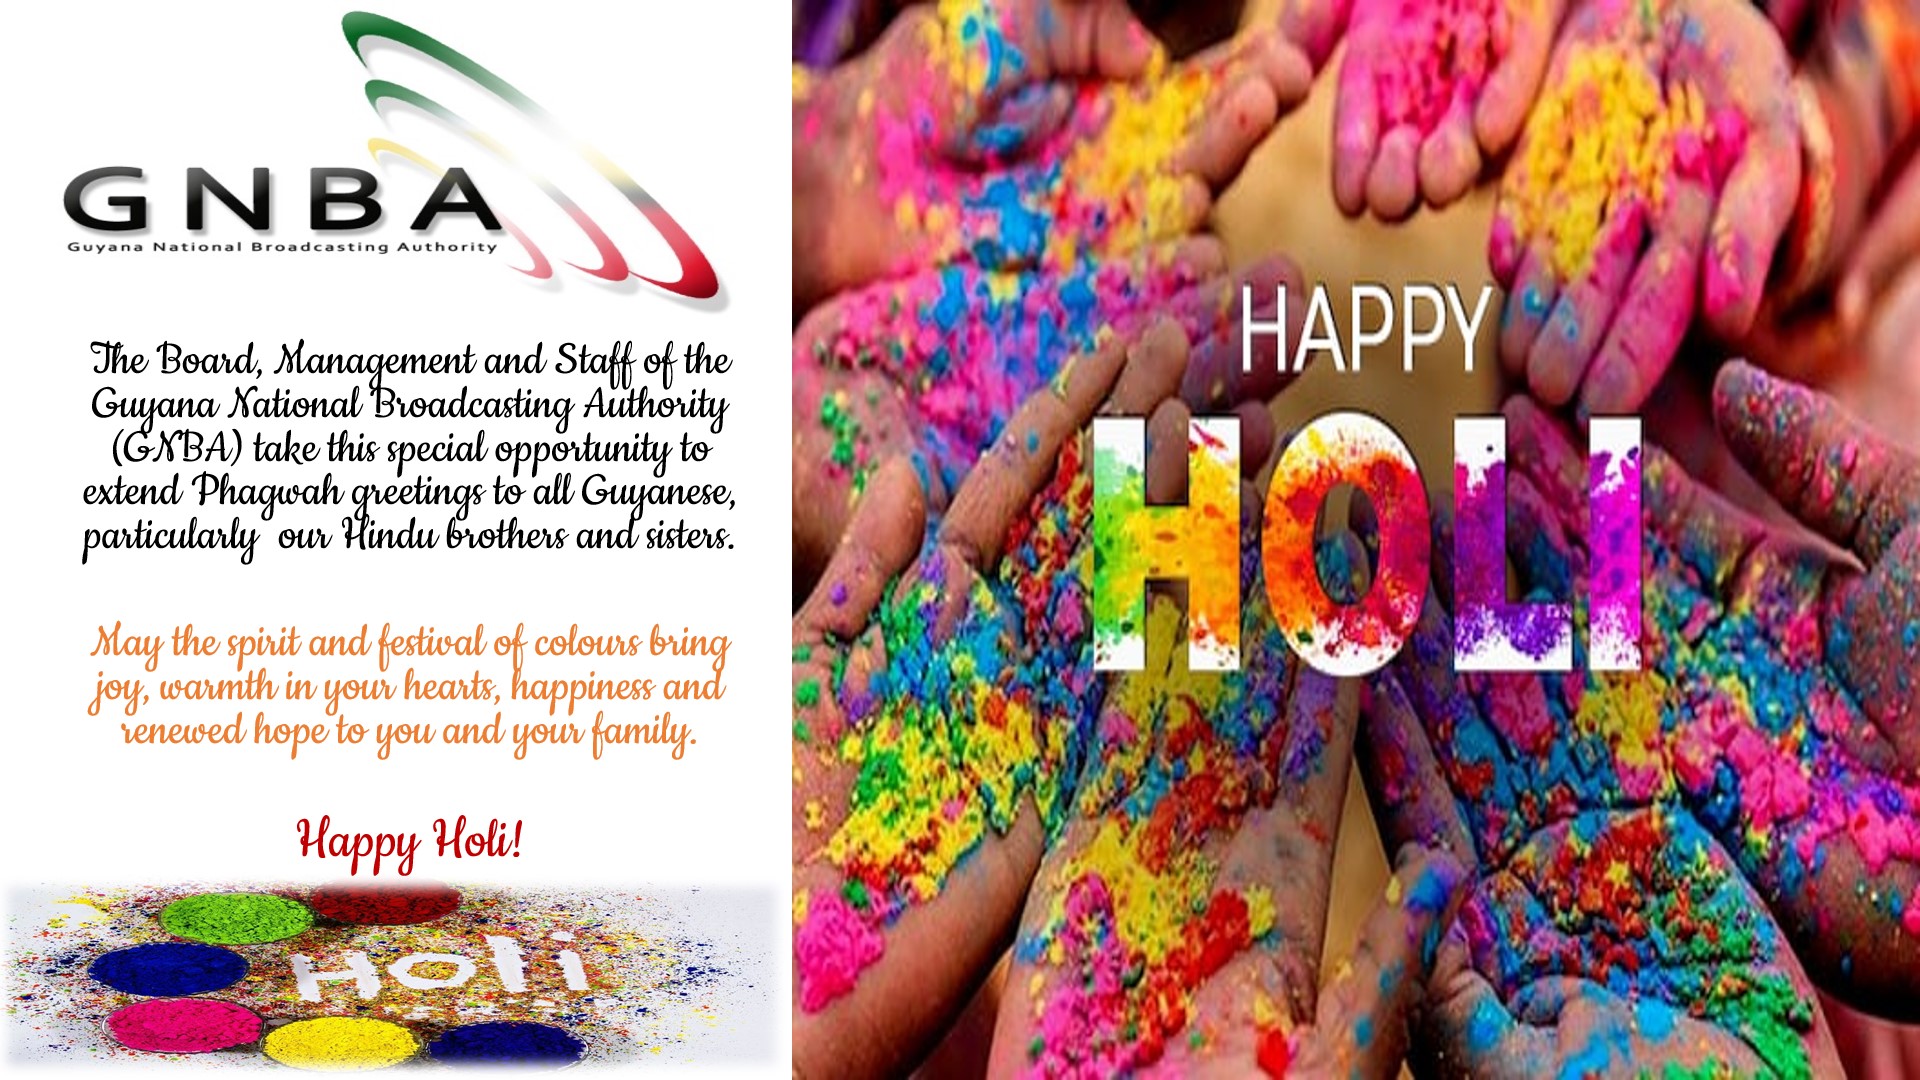 Happy Holi! Guyana National Broadcasting Authority